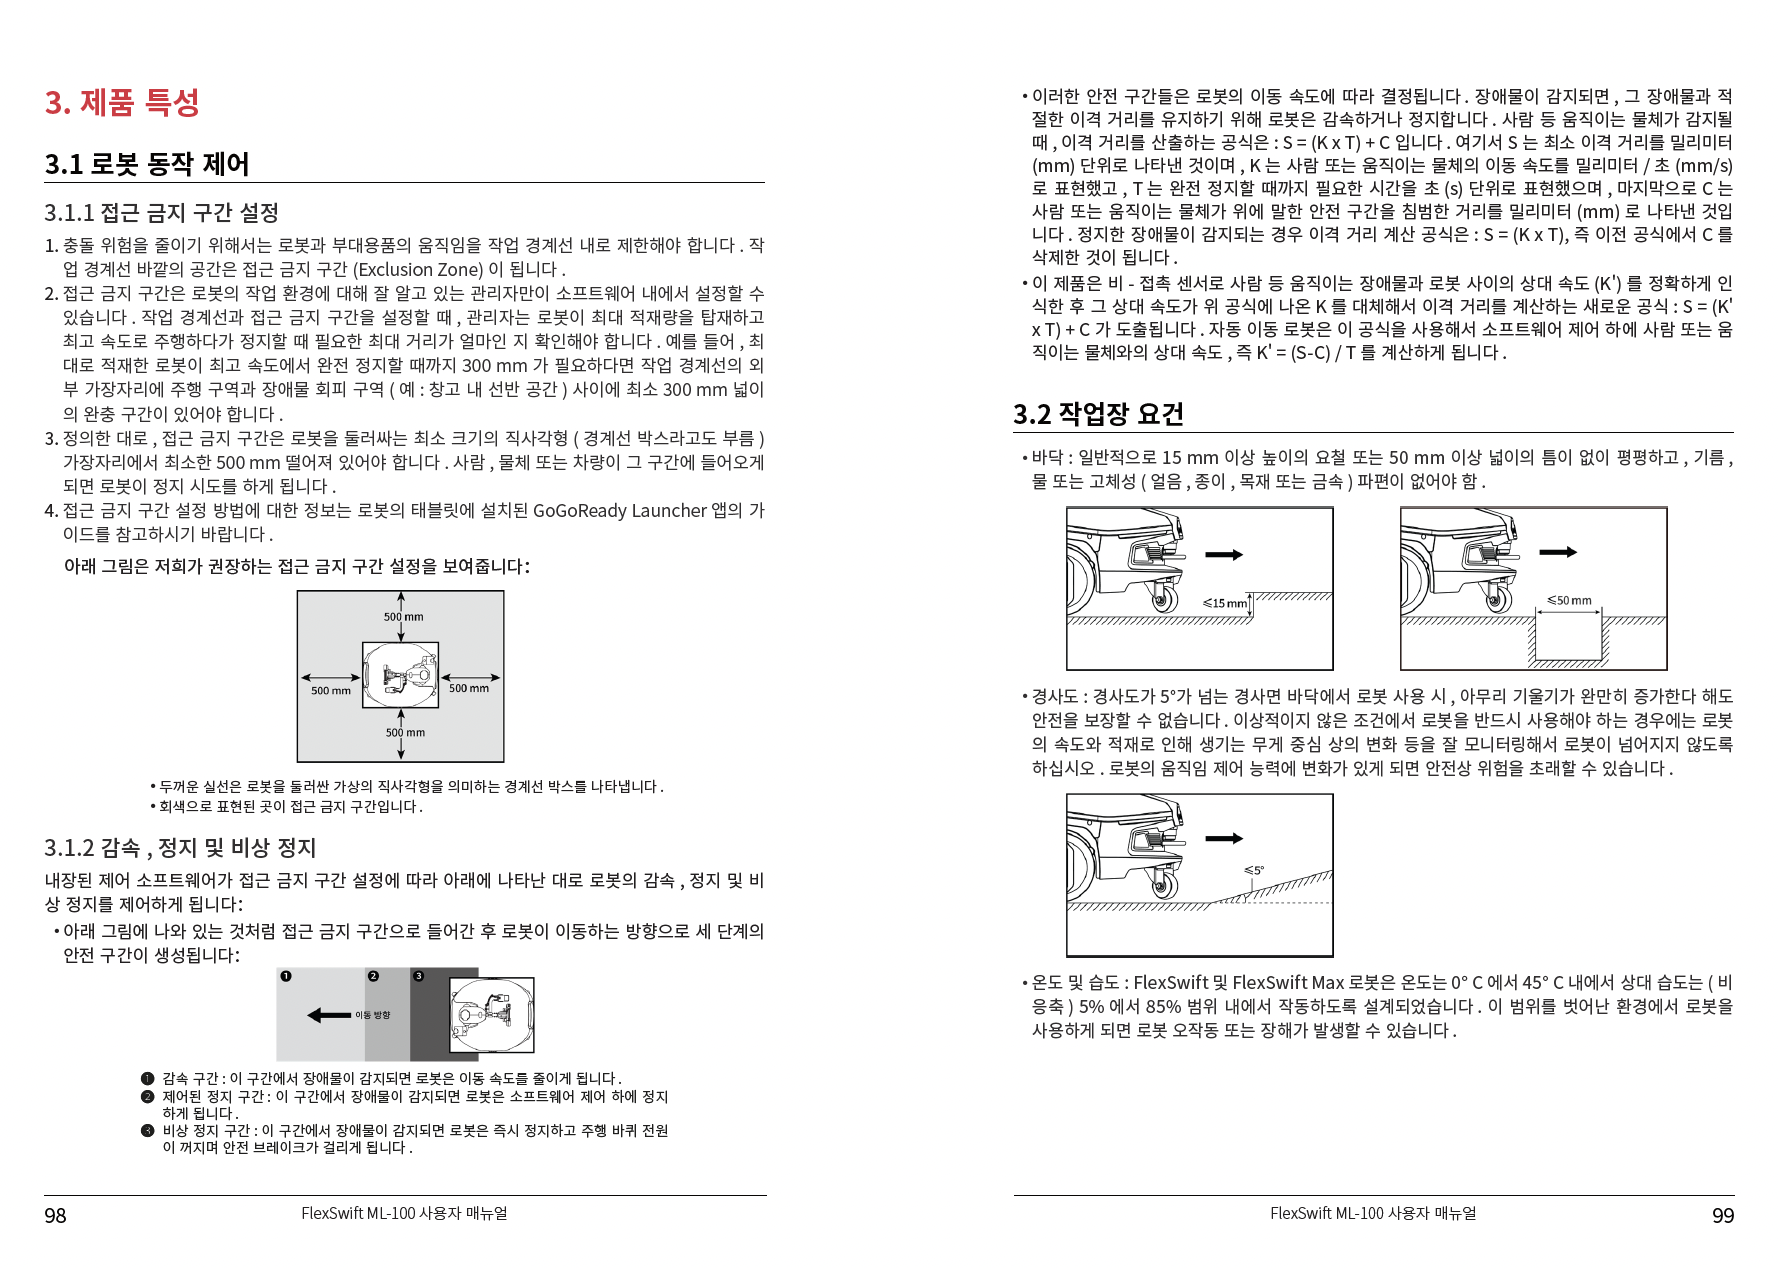 Syrius 물류로봇 FlexSwift 사용자 매뉴얼 한국어